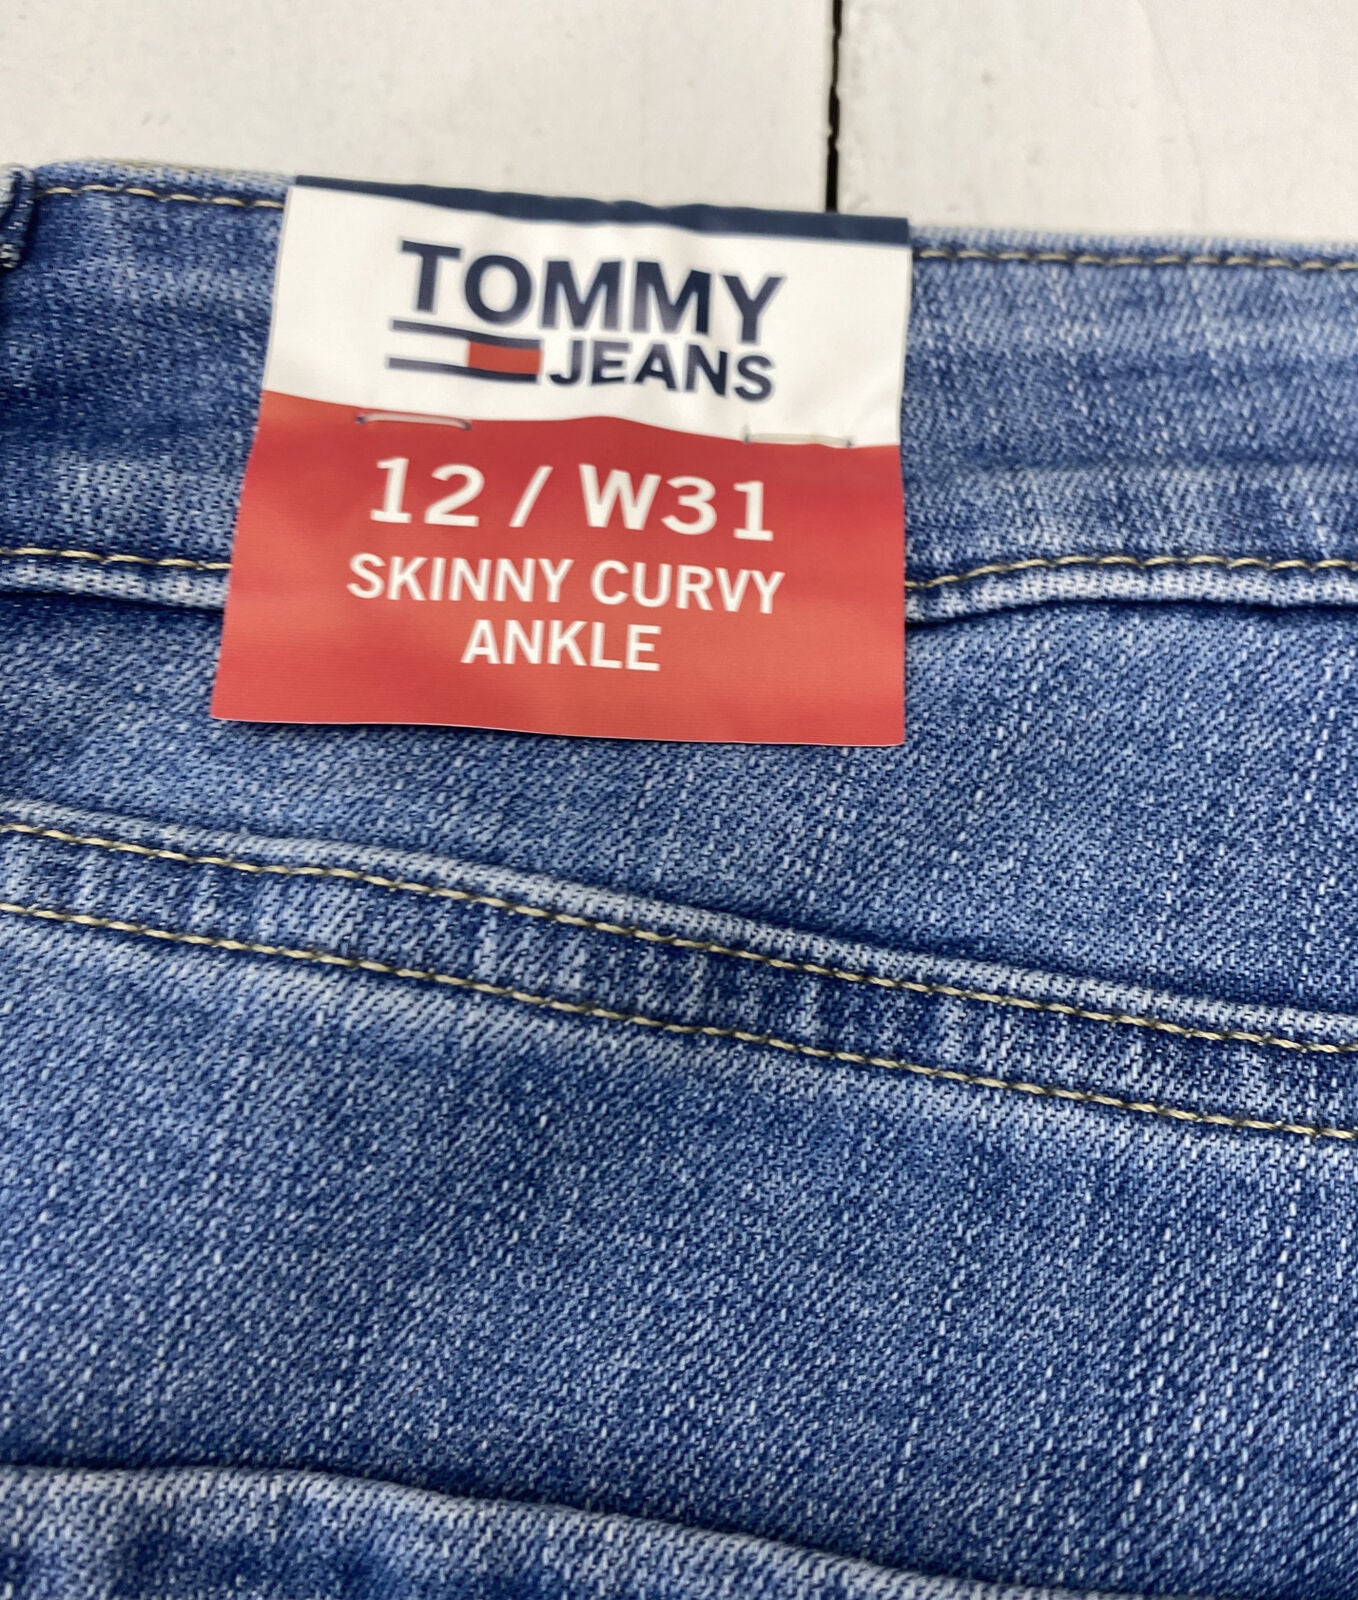 Tommy Hilfiger Skinny Curvy Ankle beyond Jean 12/31 exchange Size New Womens TOBKOFZC 